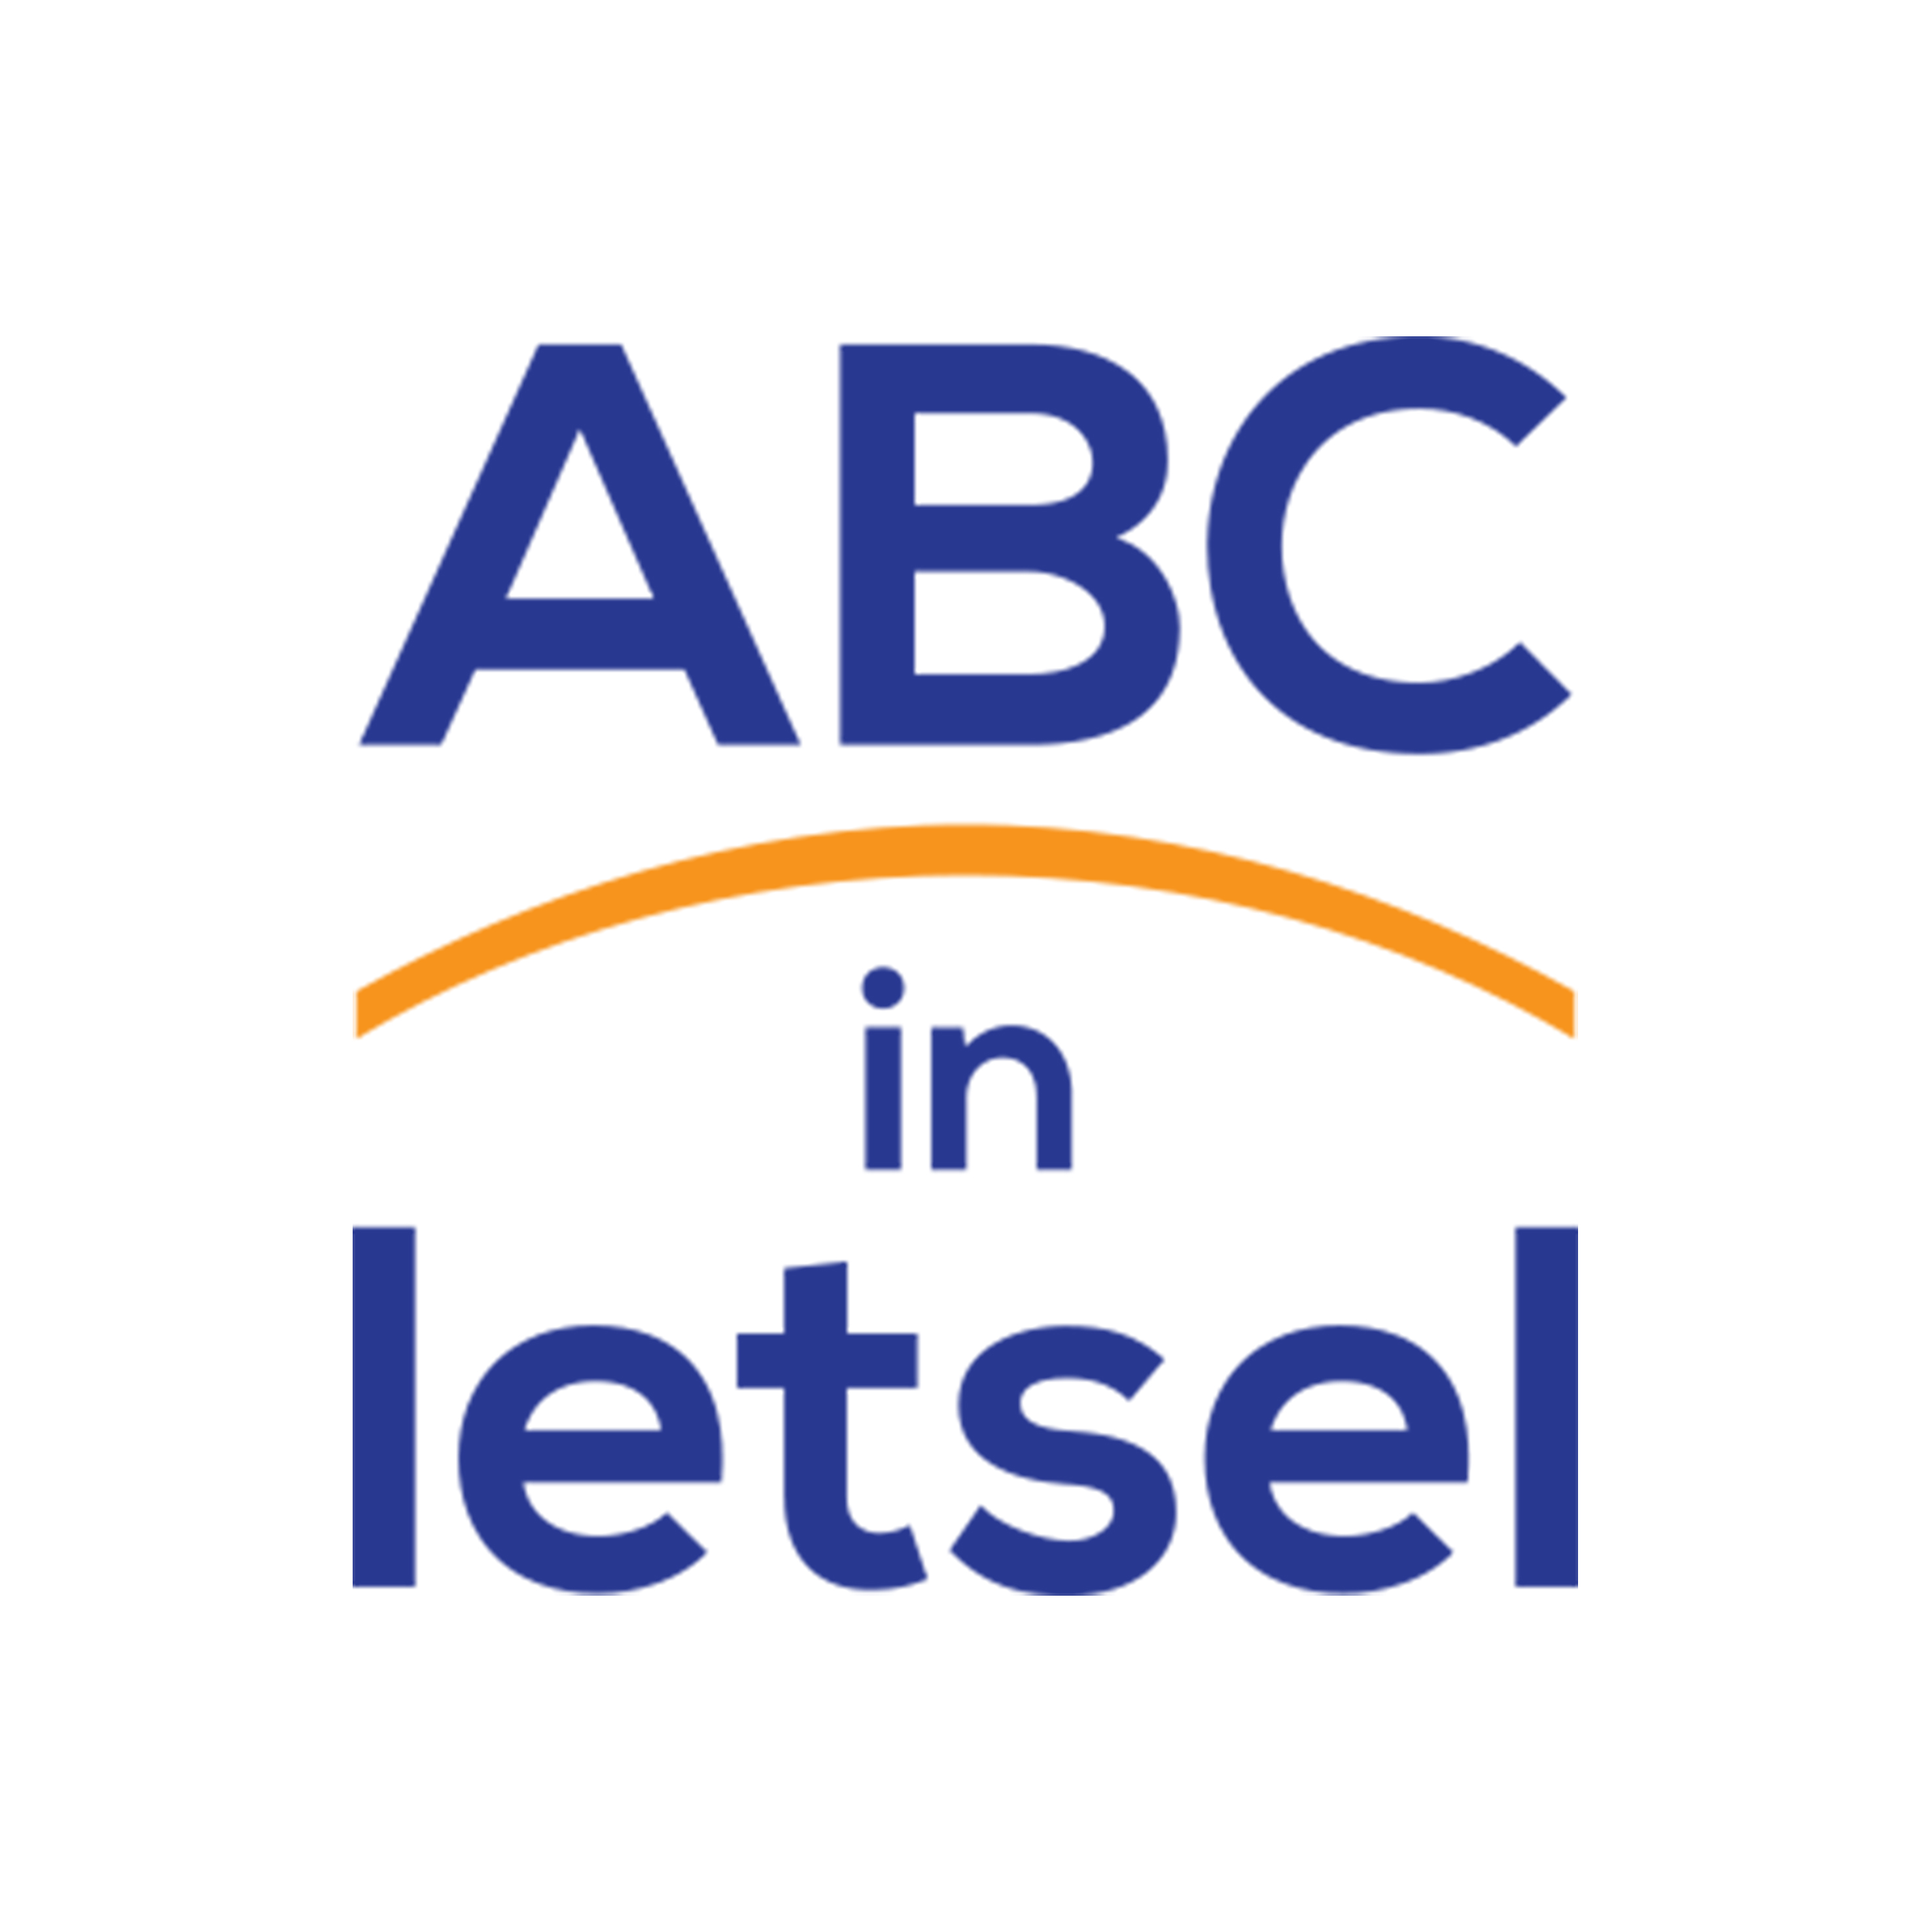 ABC in Letsel